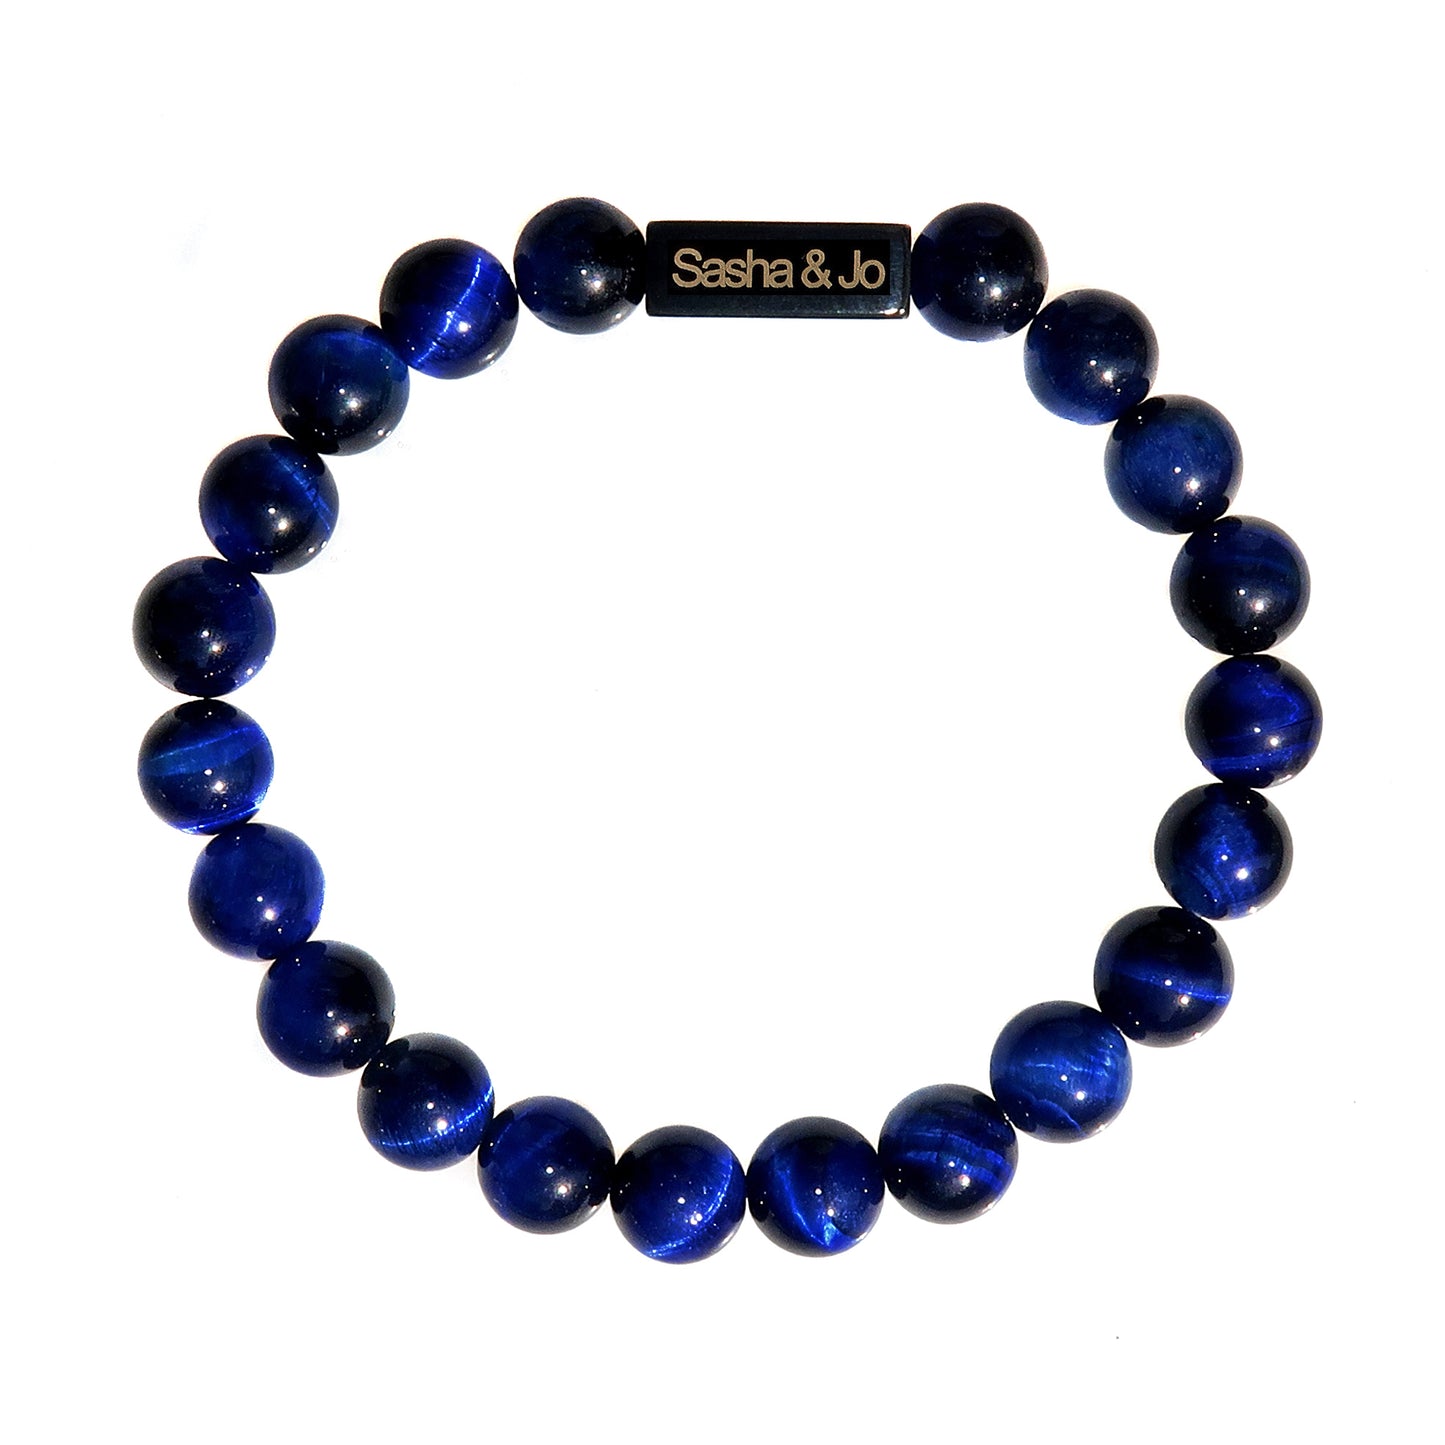 Sasha & Jo blue tiger eye beads bracelet